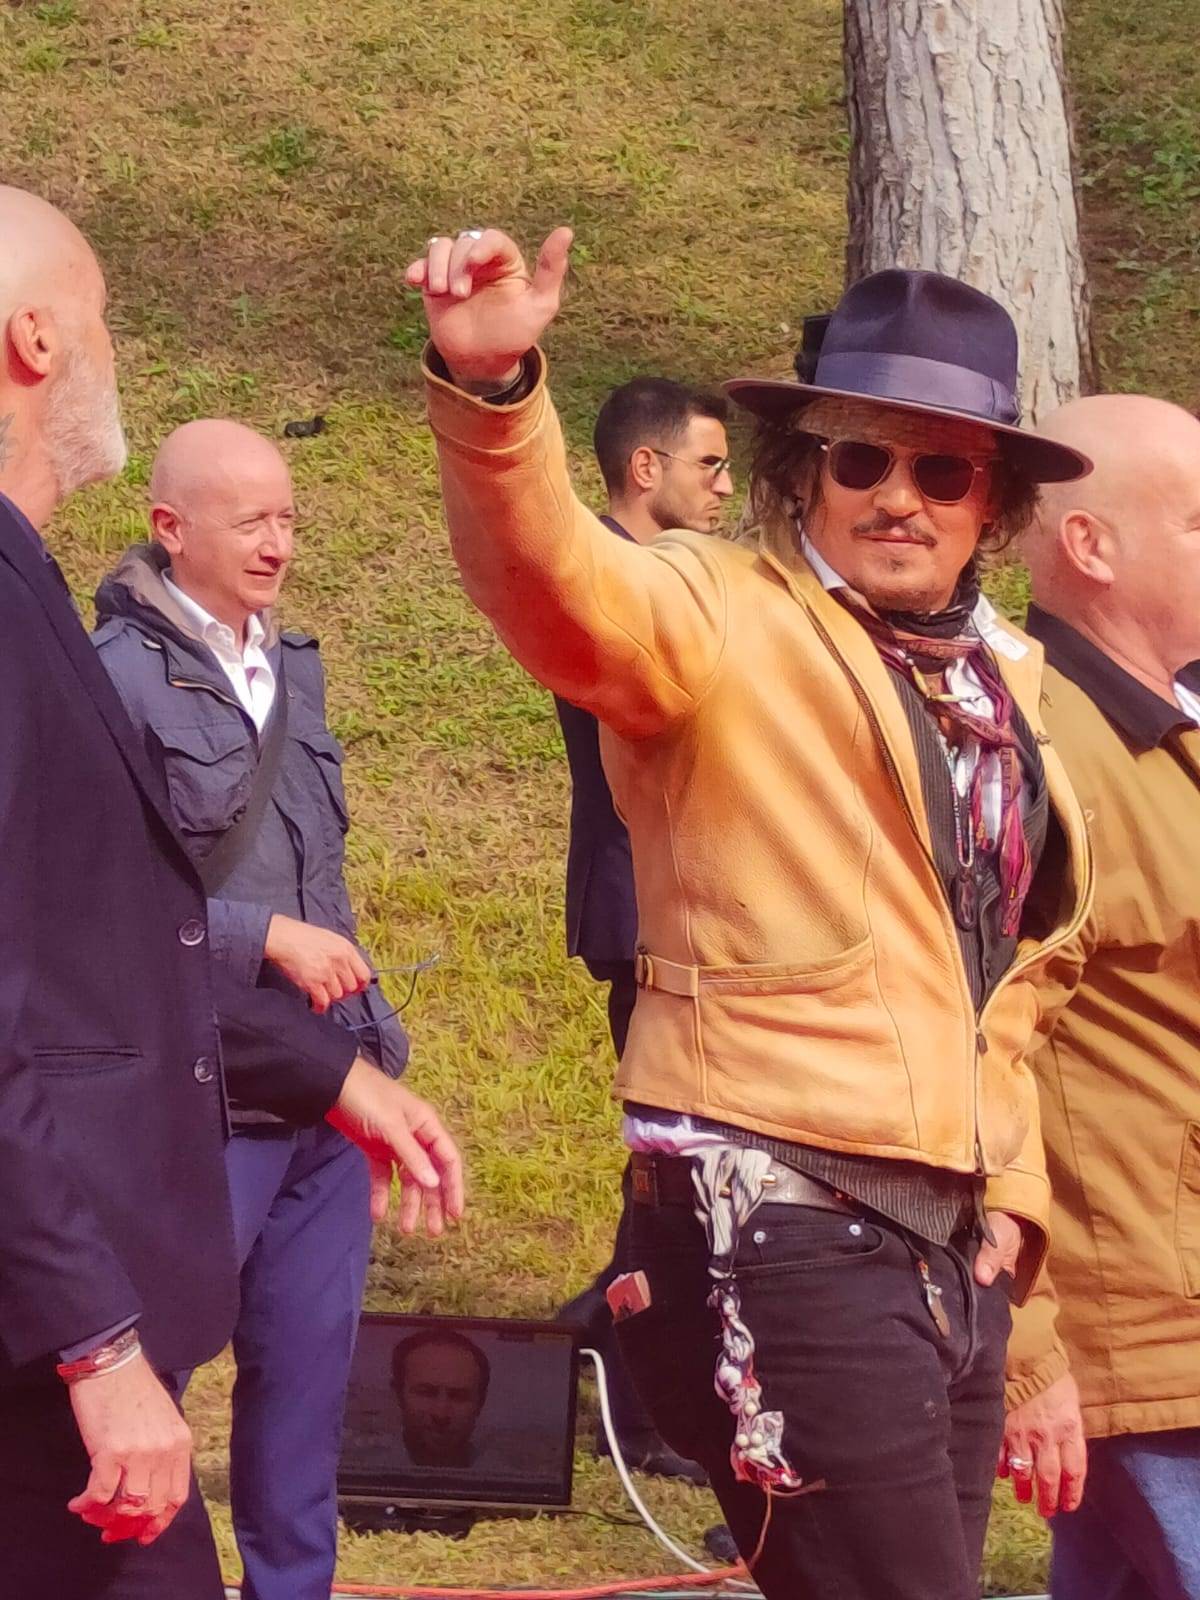 Johnny Depp una scheggia "impazzita" a Roma: "Una macchina infernale"